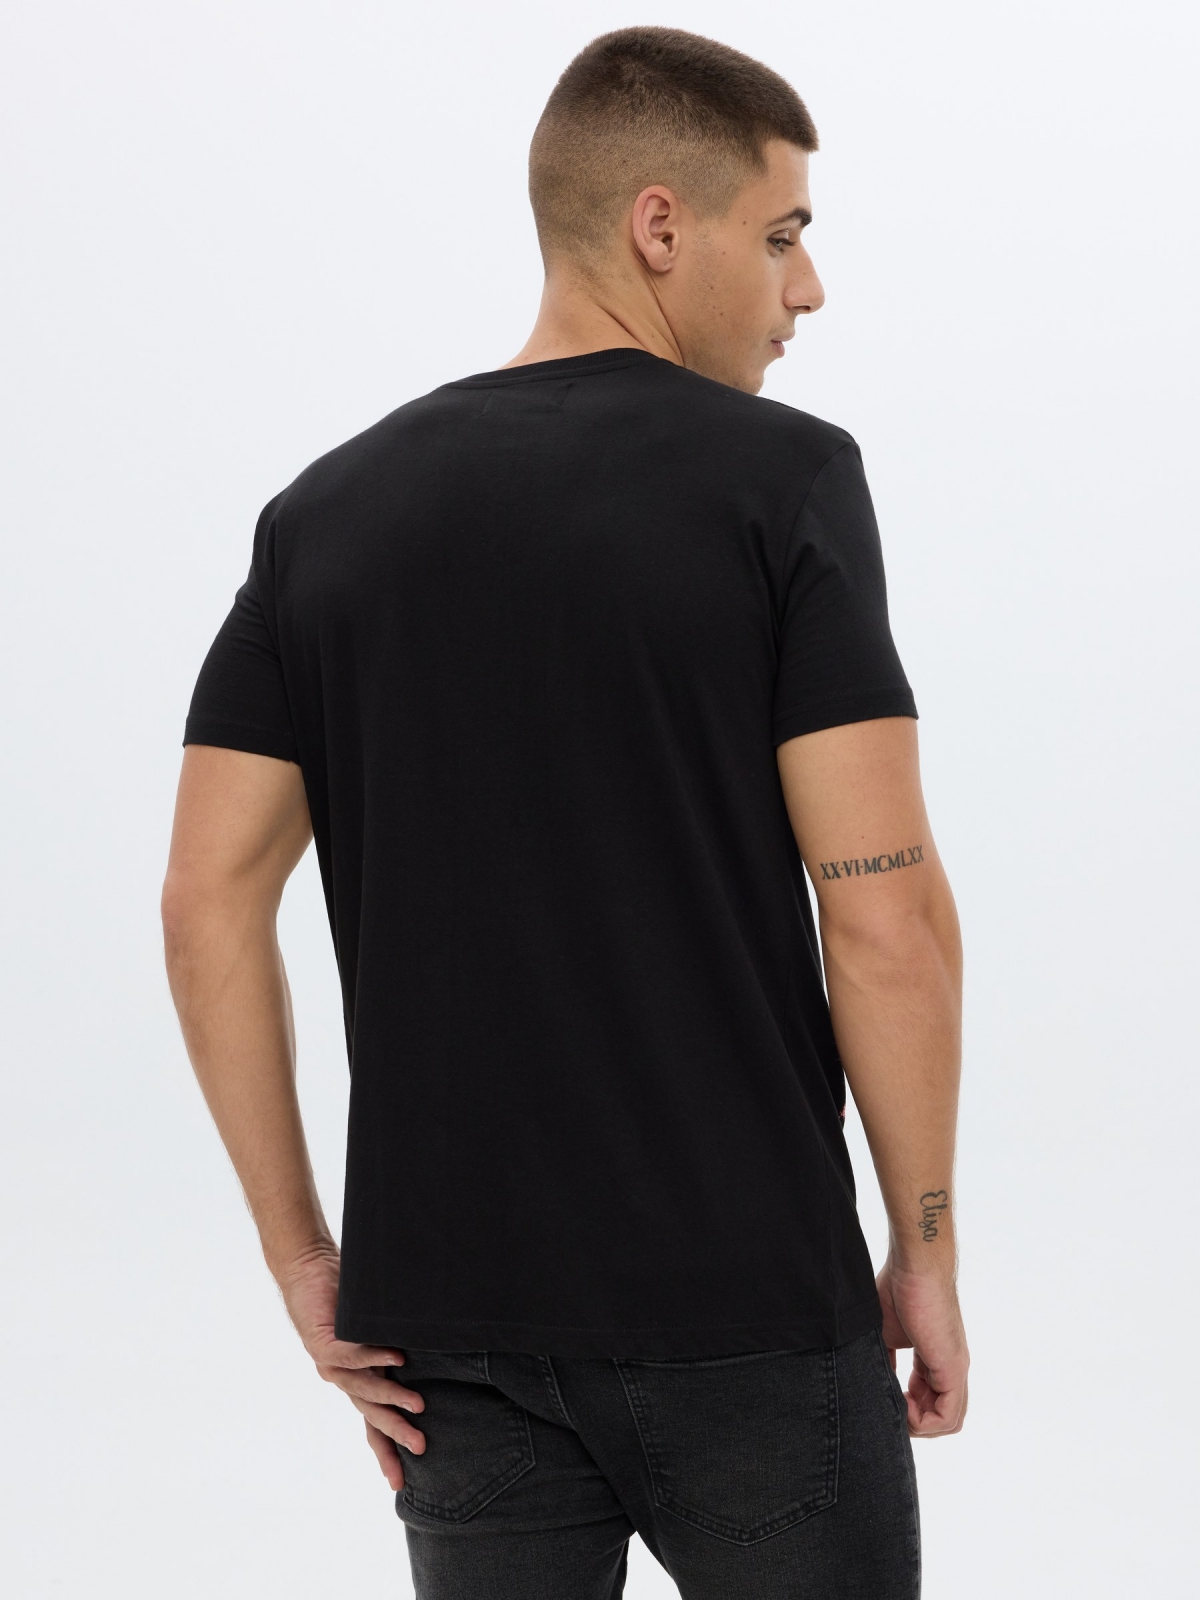 Camiseta estampado texto negro vista media trasera